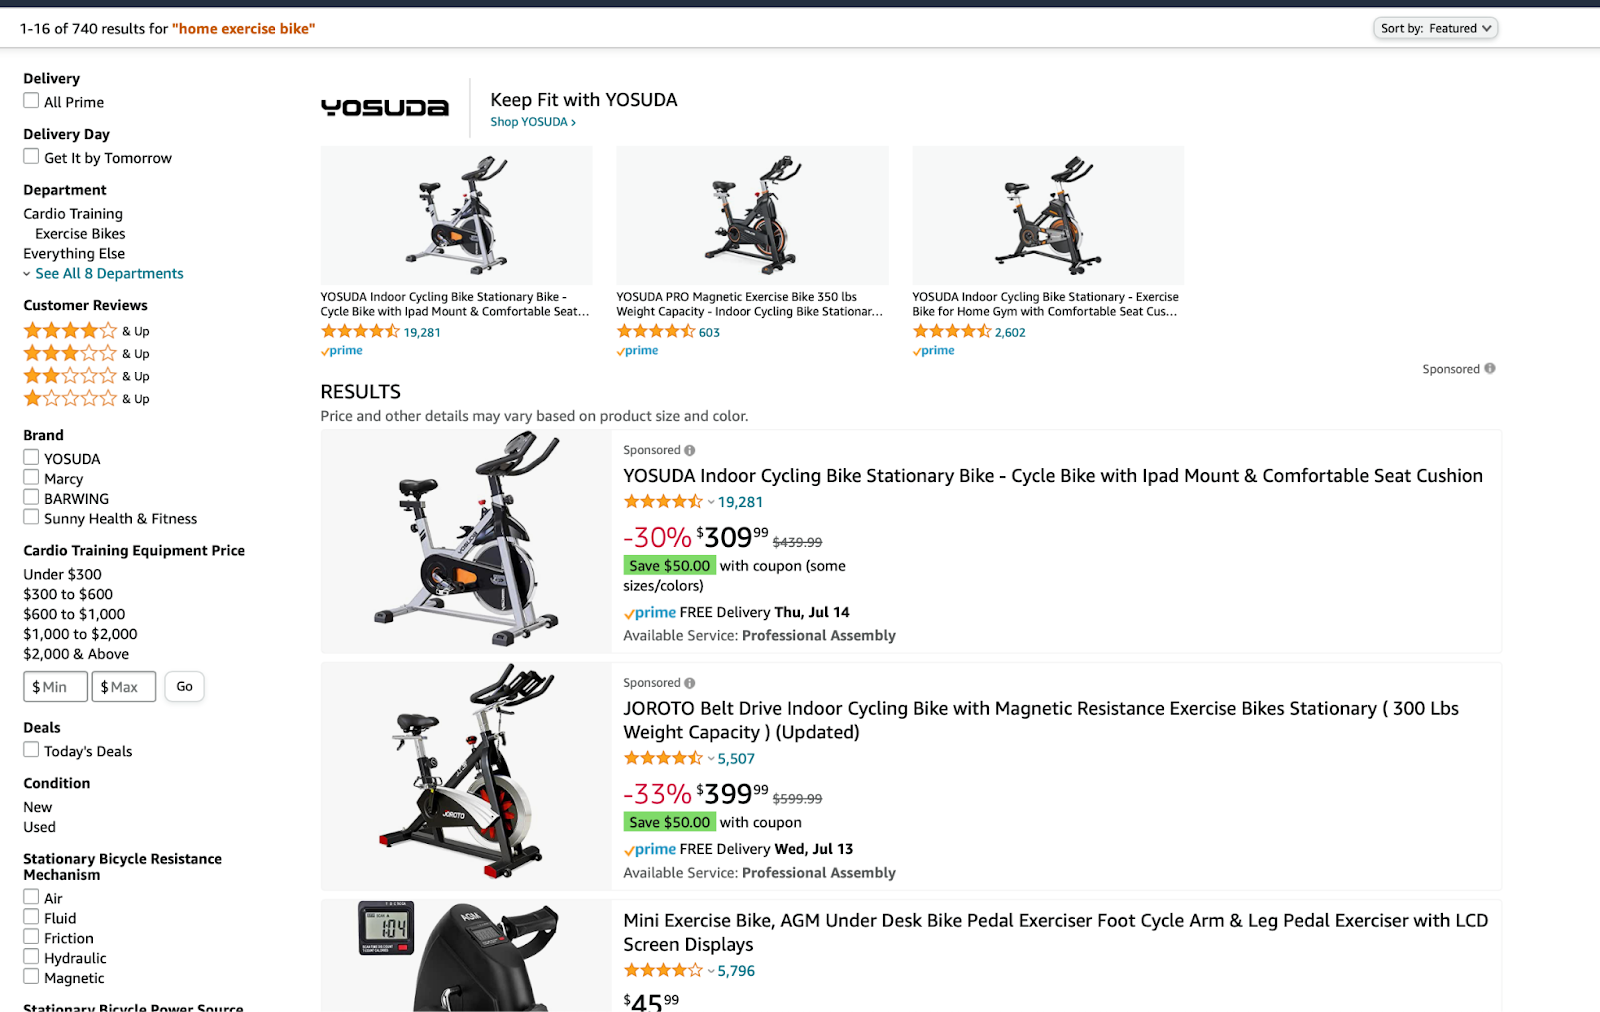 Home exercise bike search on Amazon